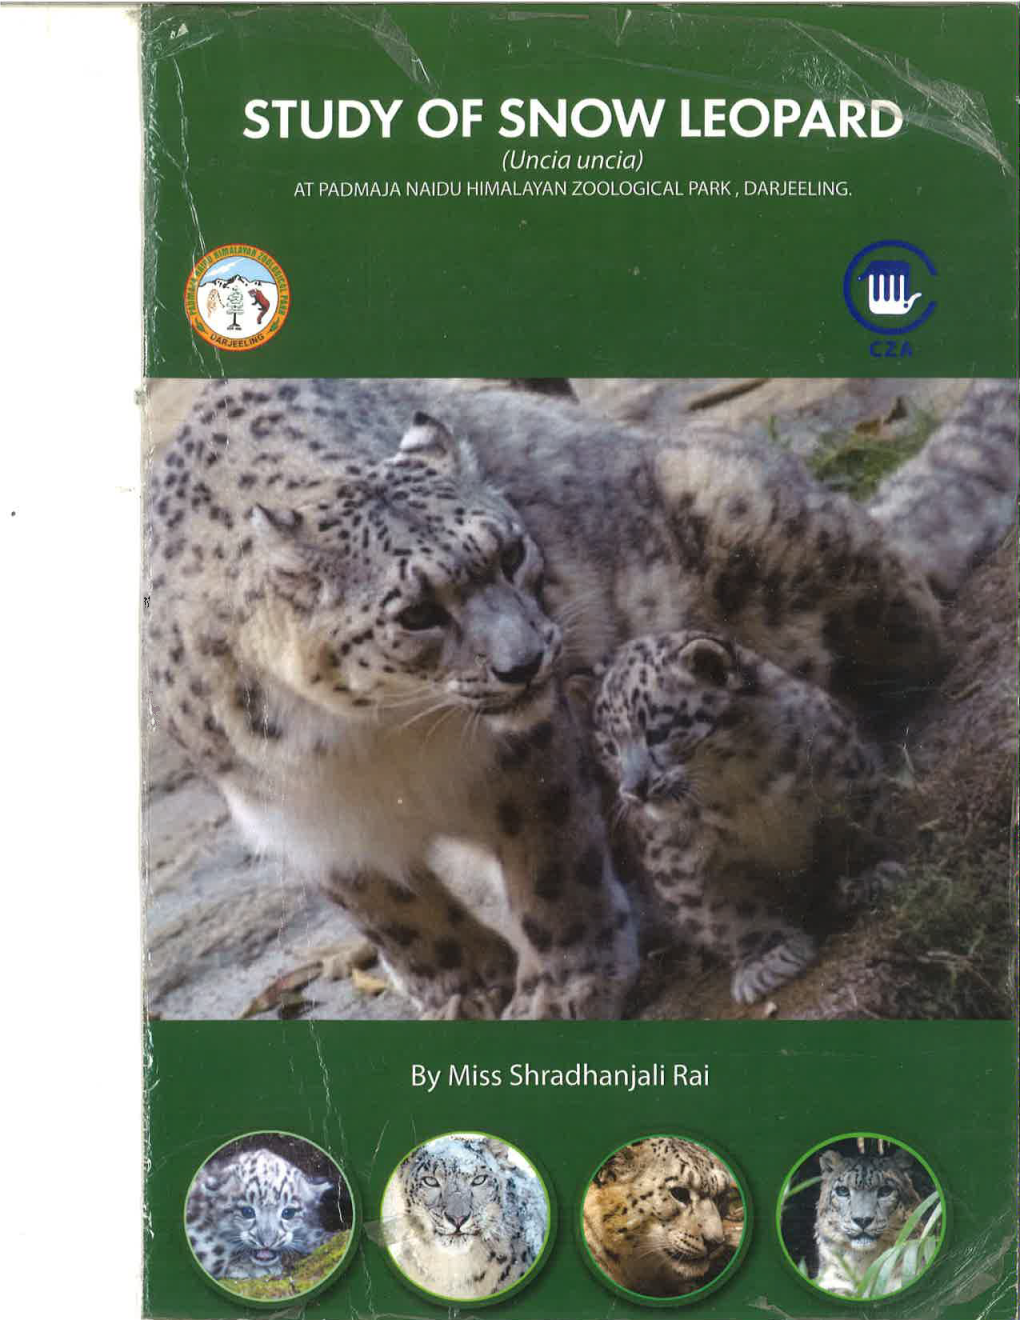 Study of Snow Leopard at Padmaja Naidu Himalayan Zoological Park, Darjeeling